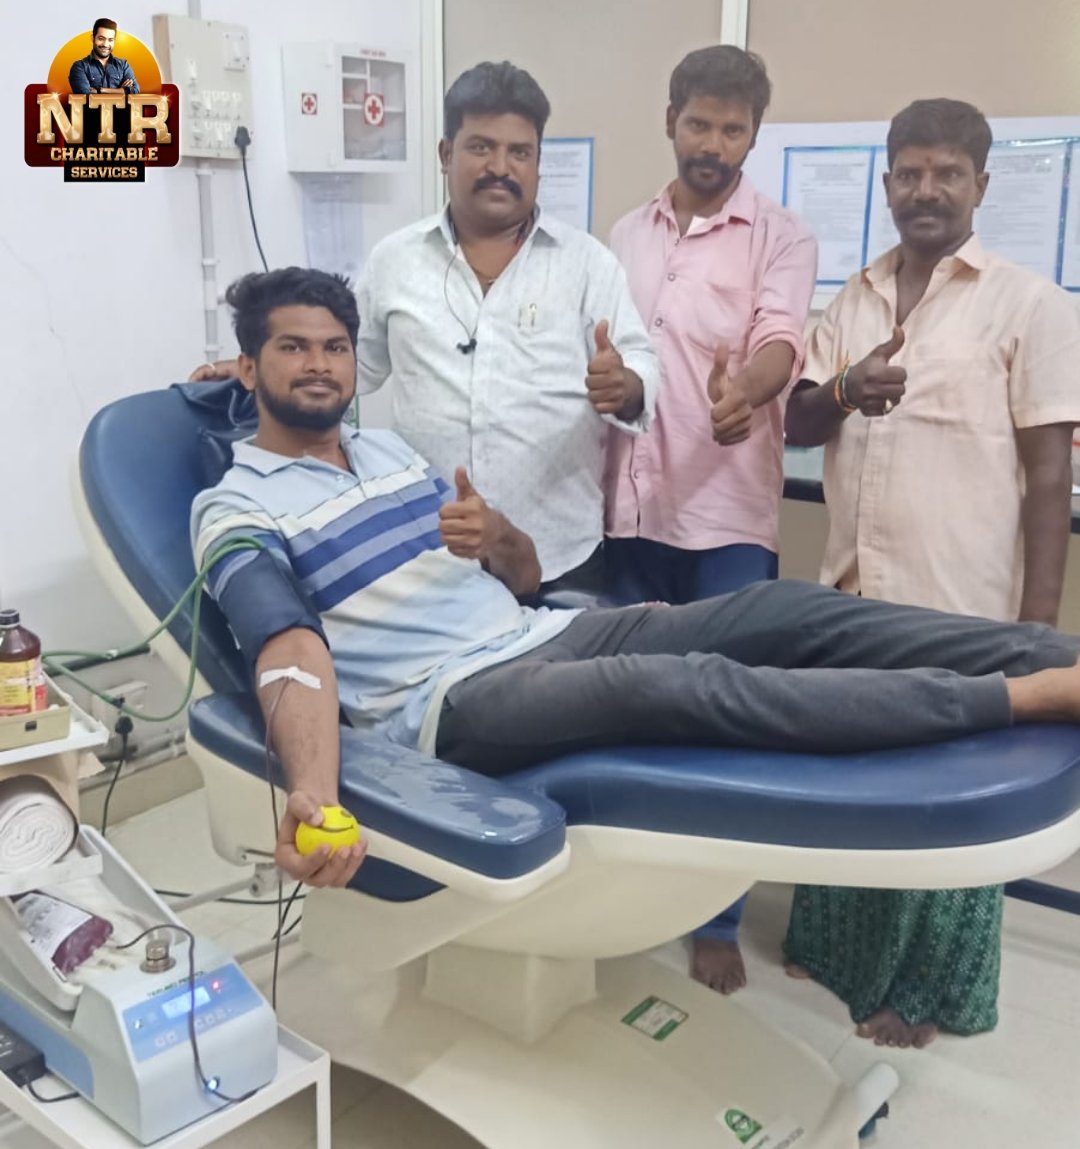 Our Team  Member ' Mr.TAUSEEF ' Donated Blood For An Emergency Case Today In Guntakal. 

@tarak9999 ❤️🙏
#DonatebloodSaveLife #NTRCharitableServices